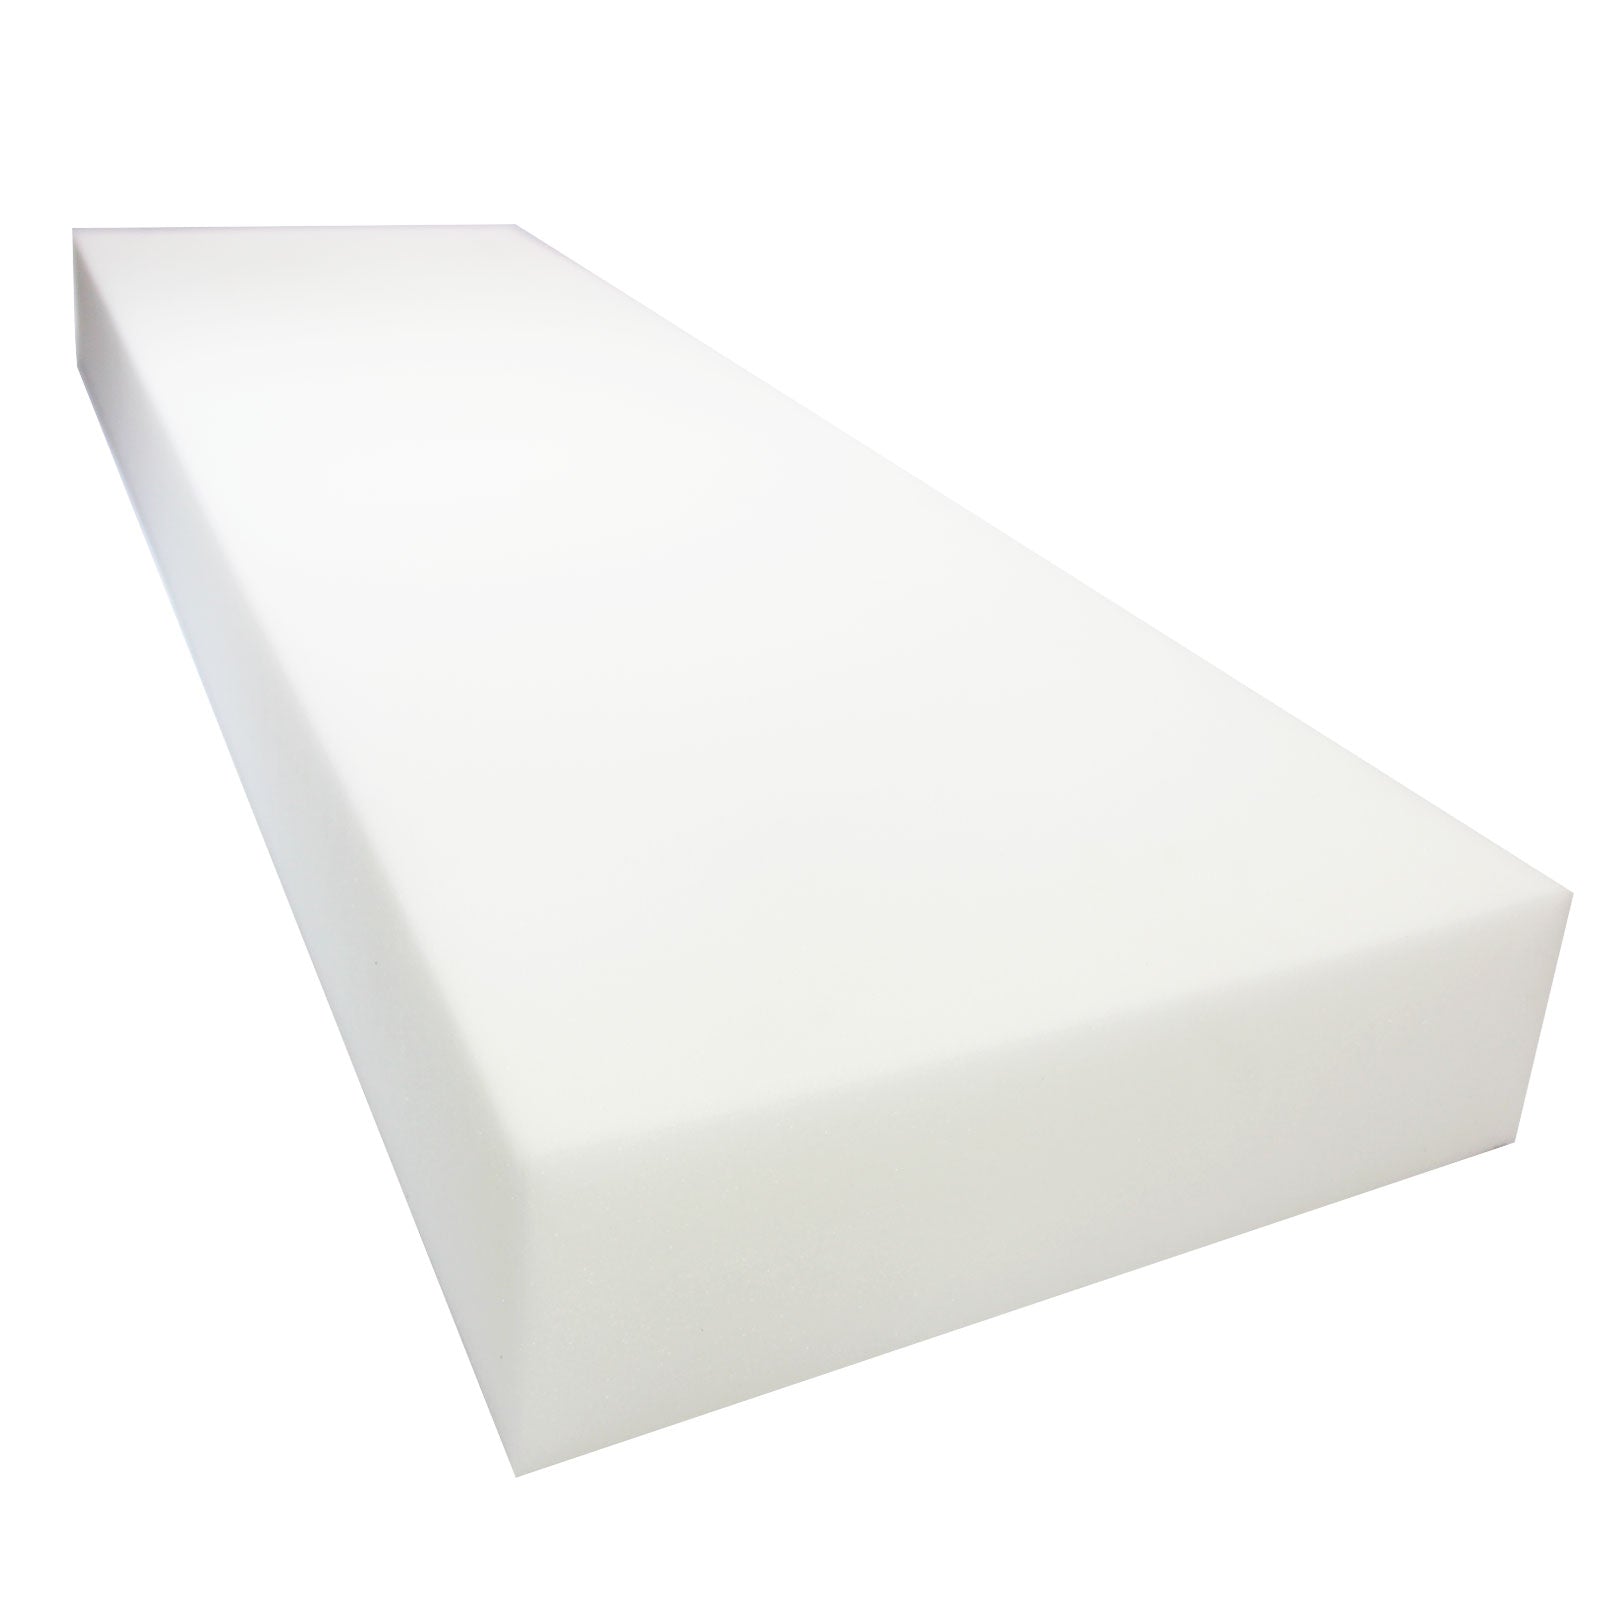 Upholstery Foam Cushion Sheet- 5x27x72 High Density Support Premium  Luxury Quality- Good for Sofa Cushion, Mattresses, Wheelchair by Dream  Solutions USA 